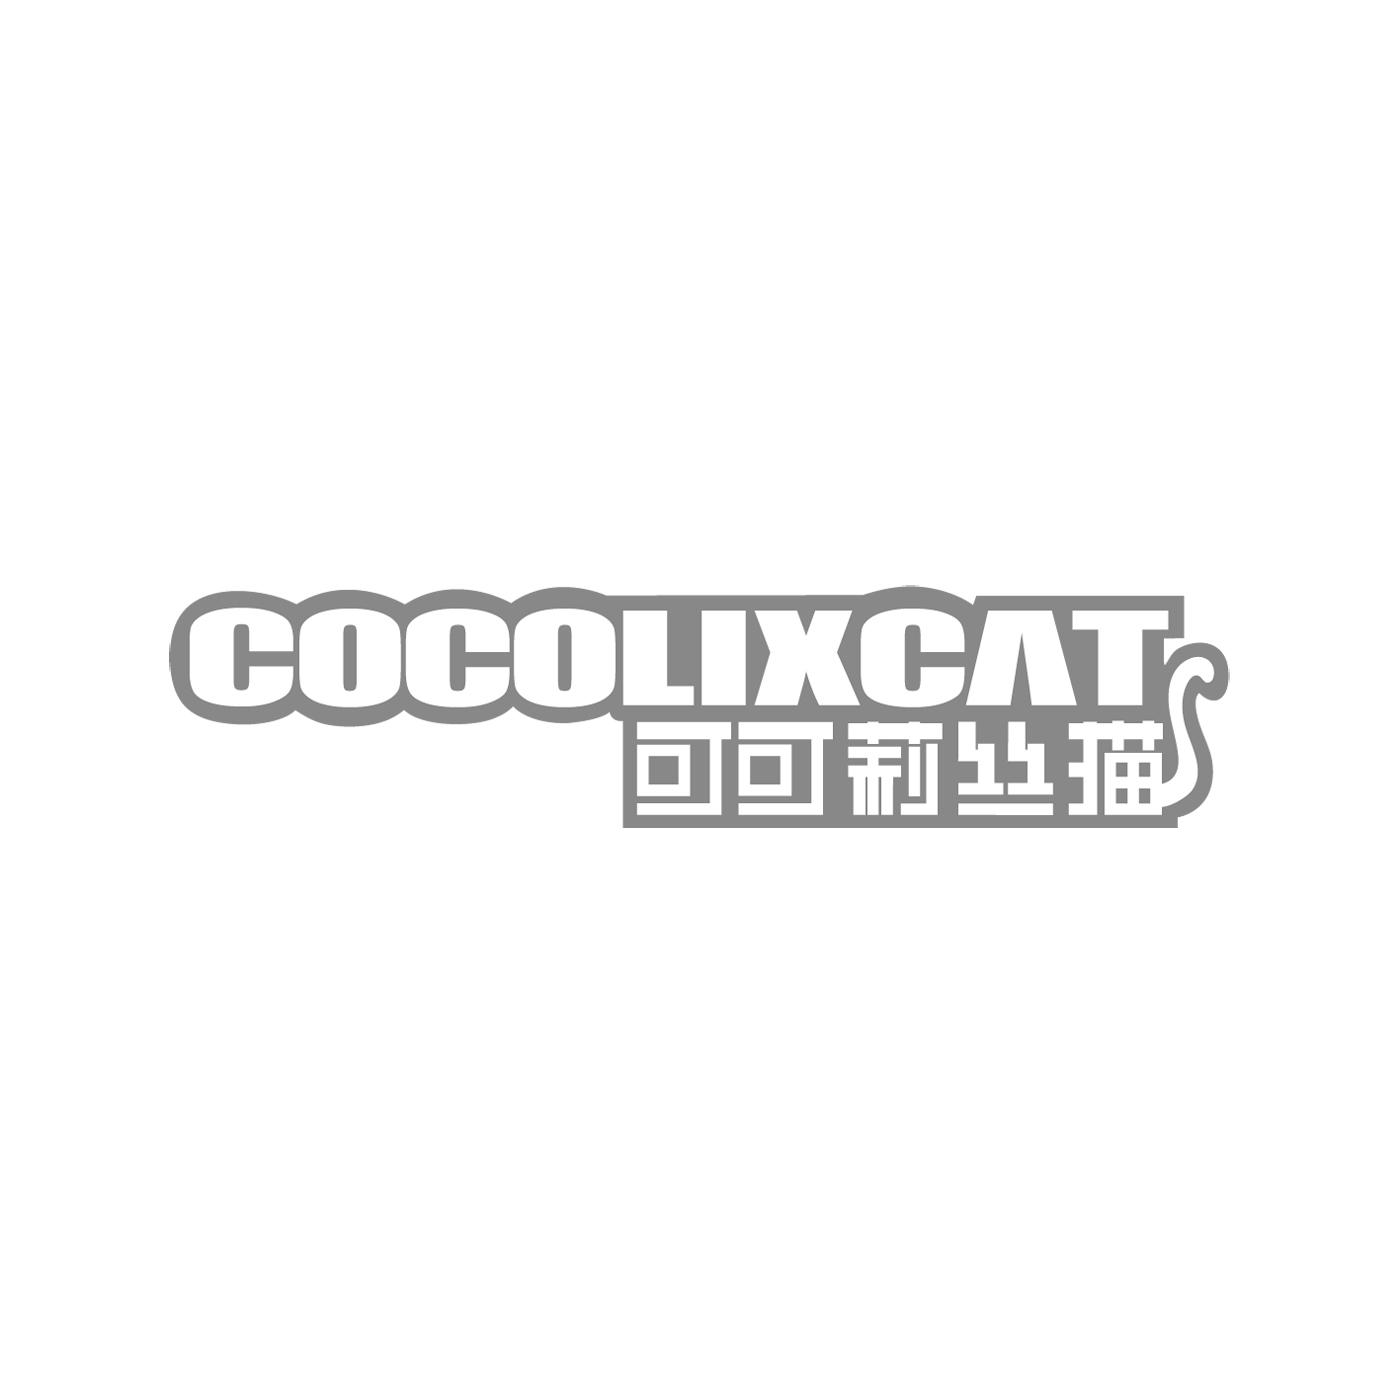 可可莉丝猫 COCOLIXCAT商标转让